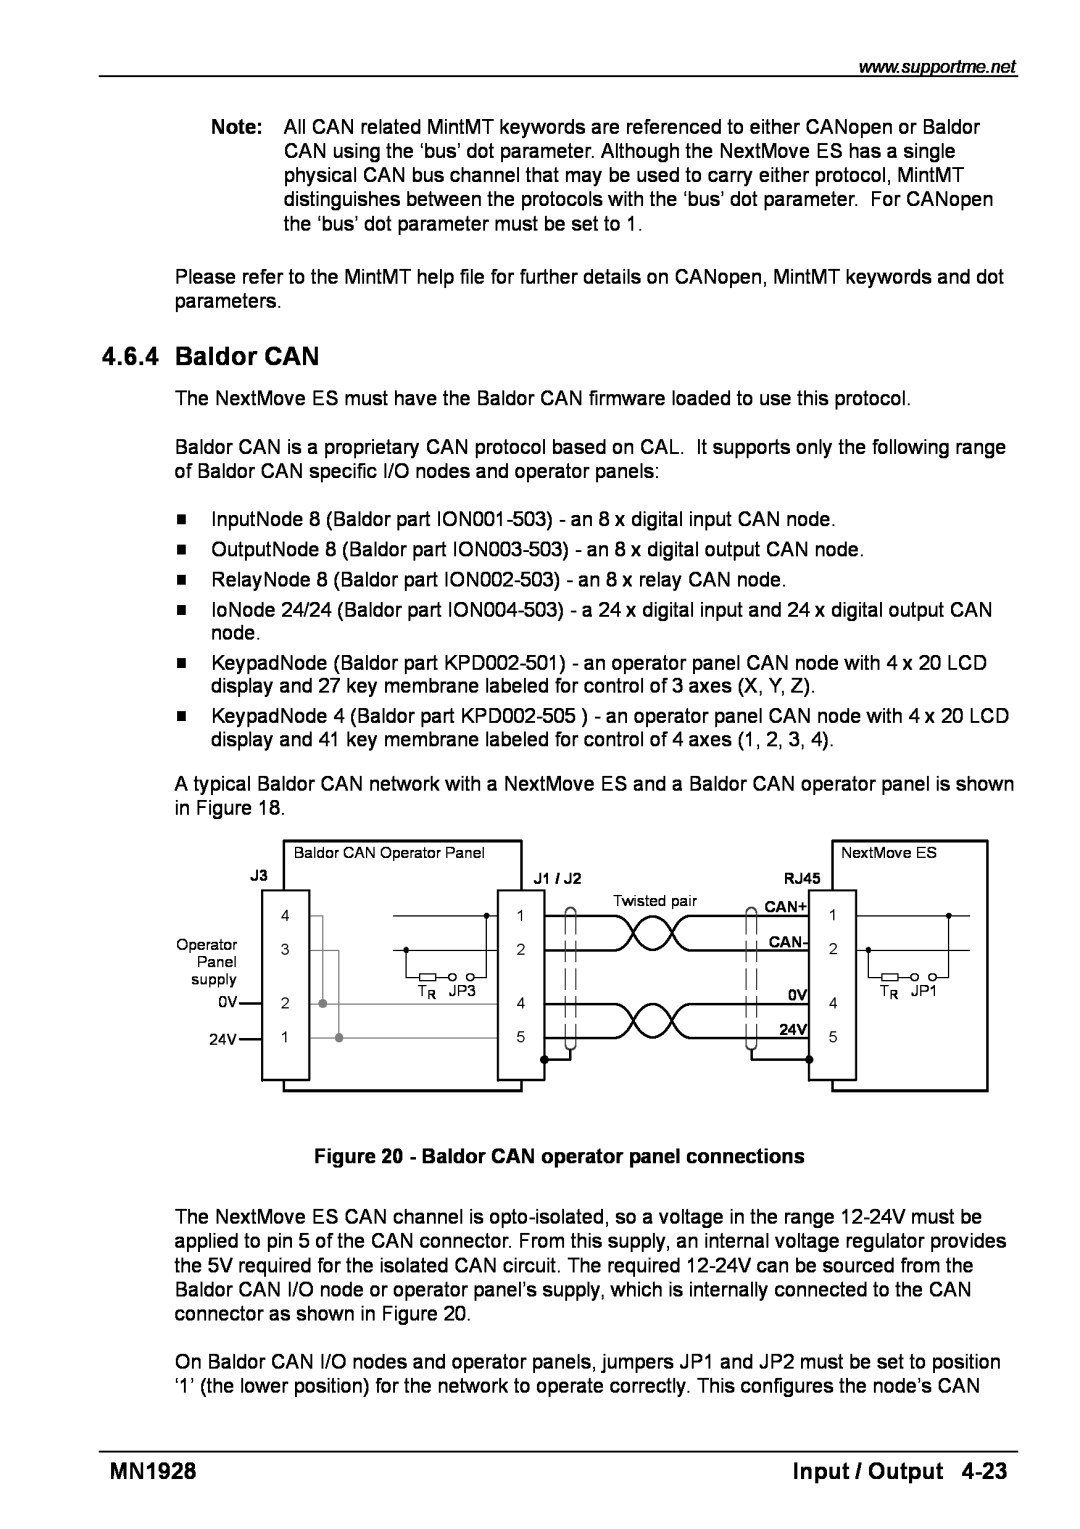 Baldor MN1928 installation manual Input / Output, Baldor CAN operator panel connections 